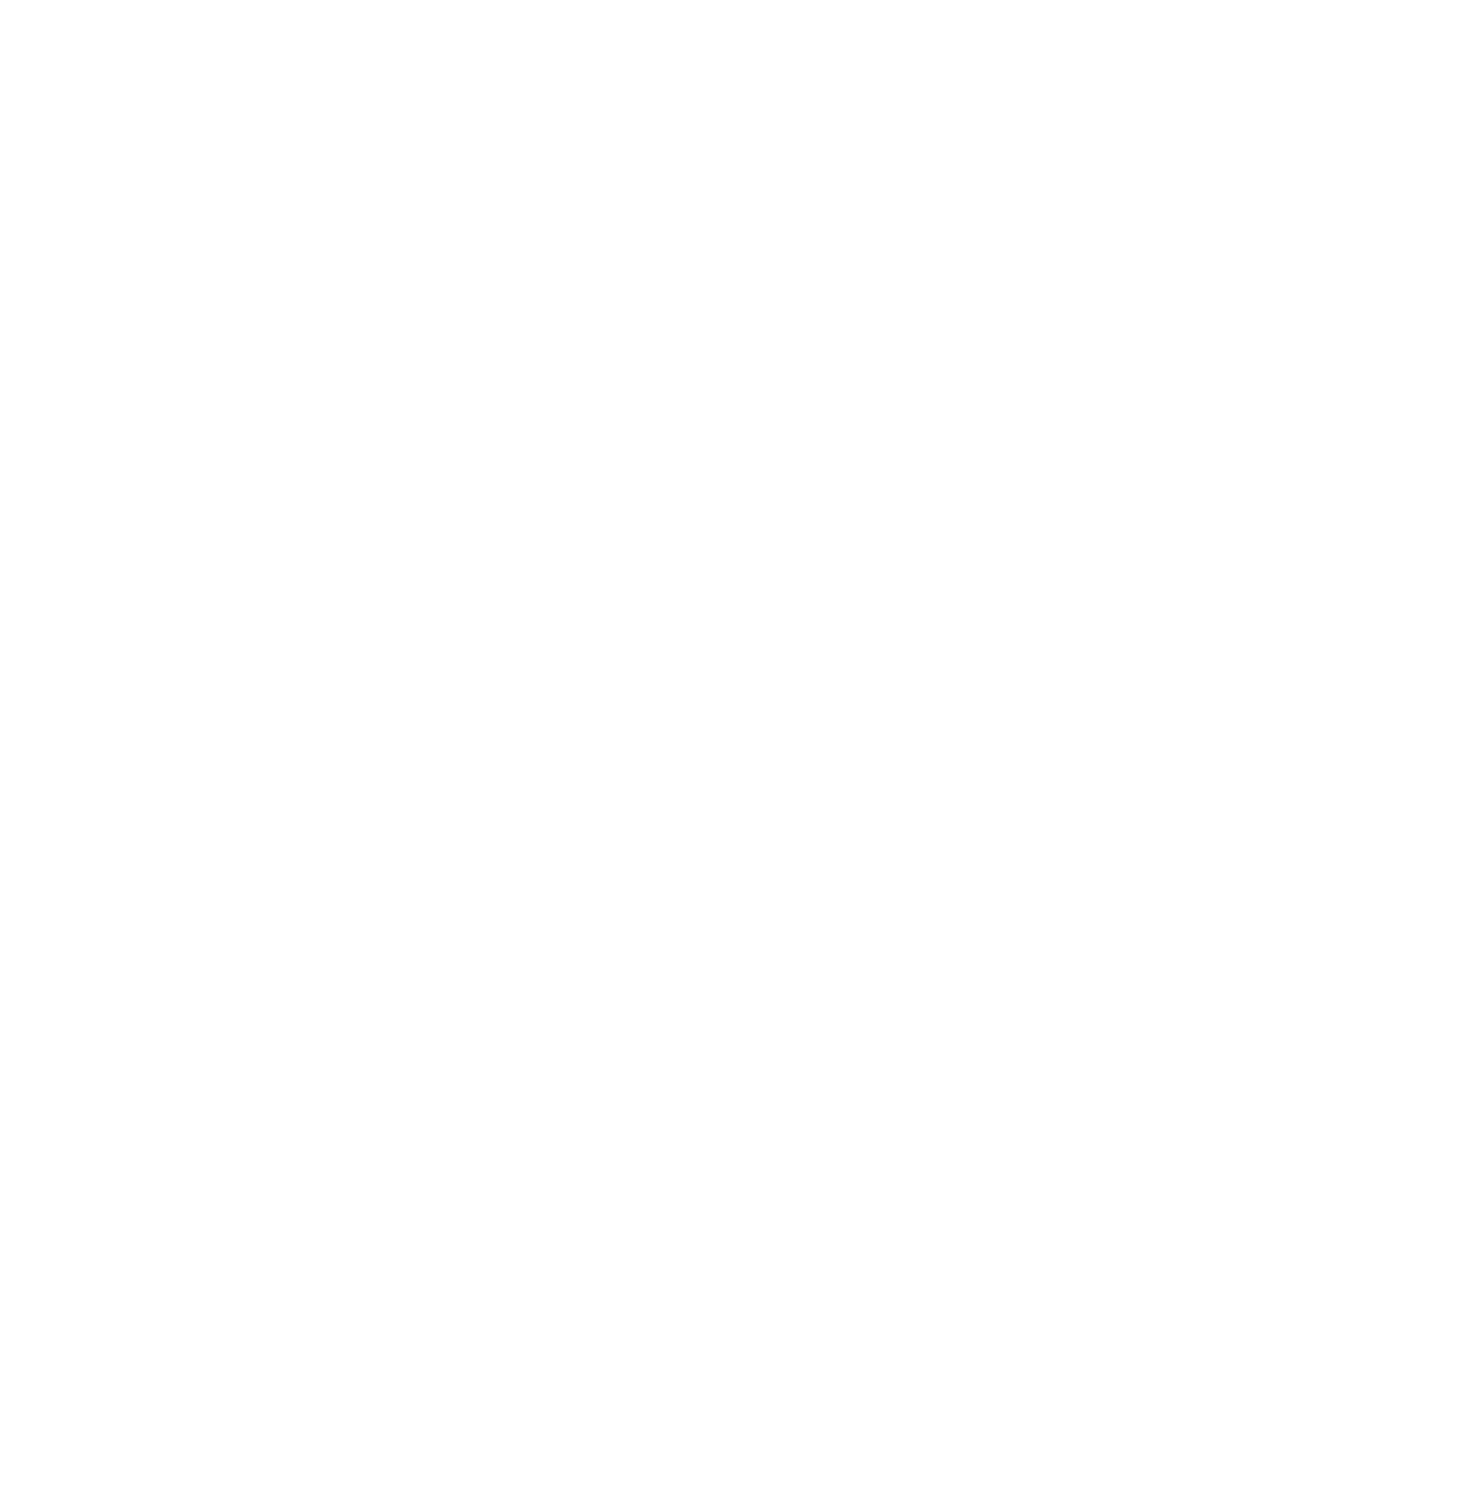 MainStreet Bancshares logo for dark backgrounds (transparent PNG)